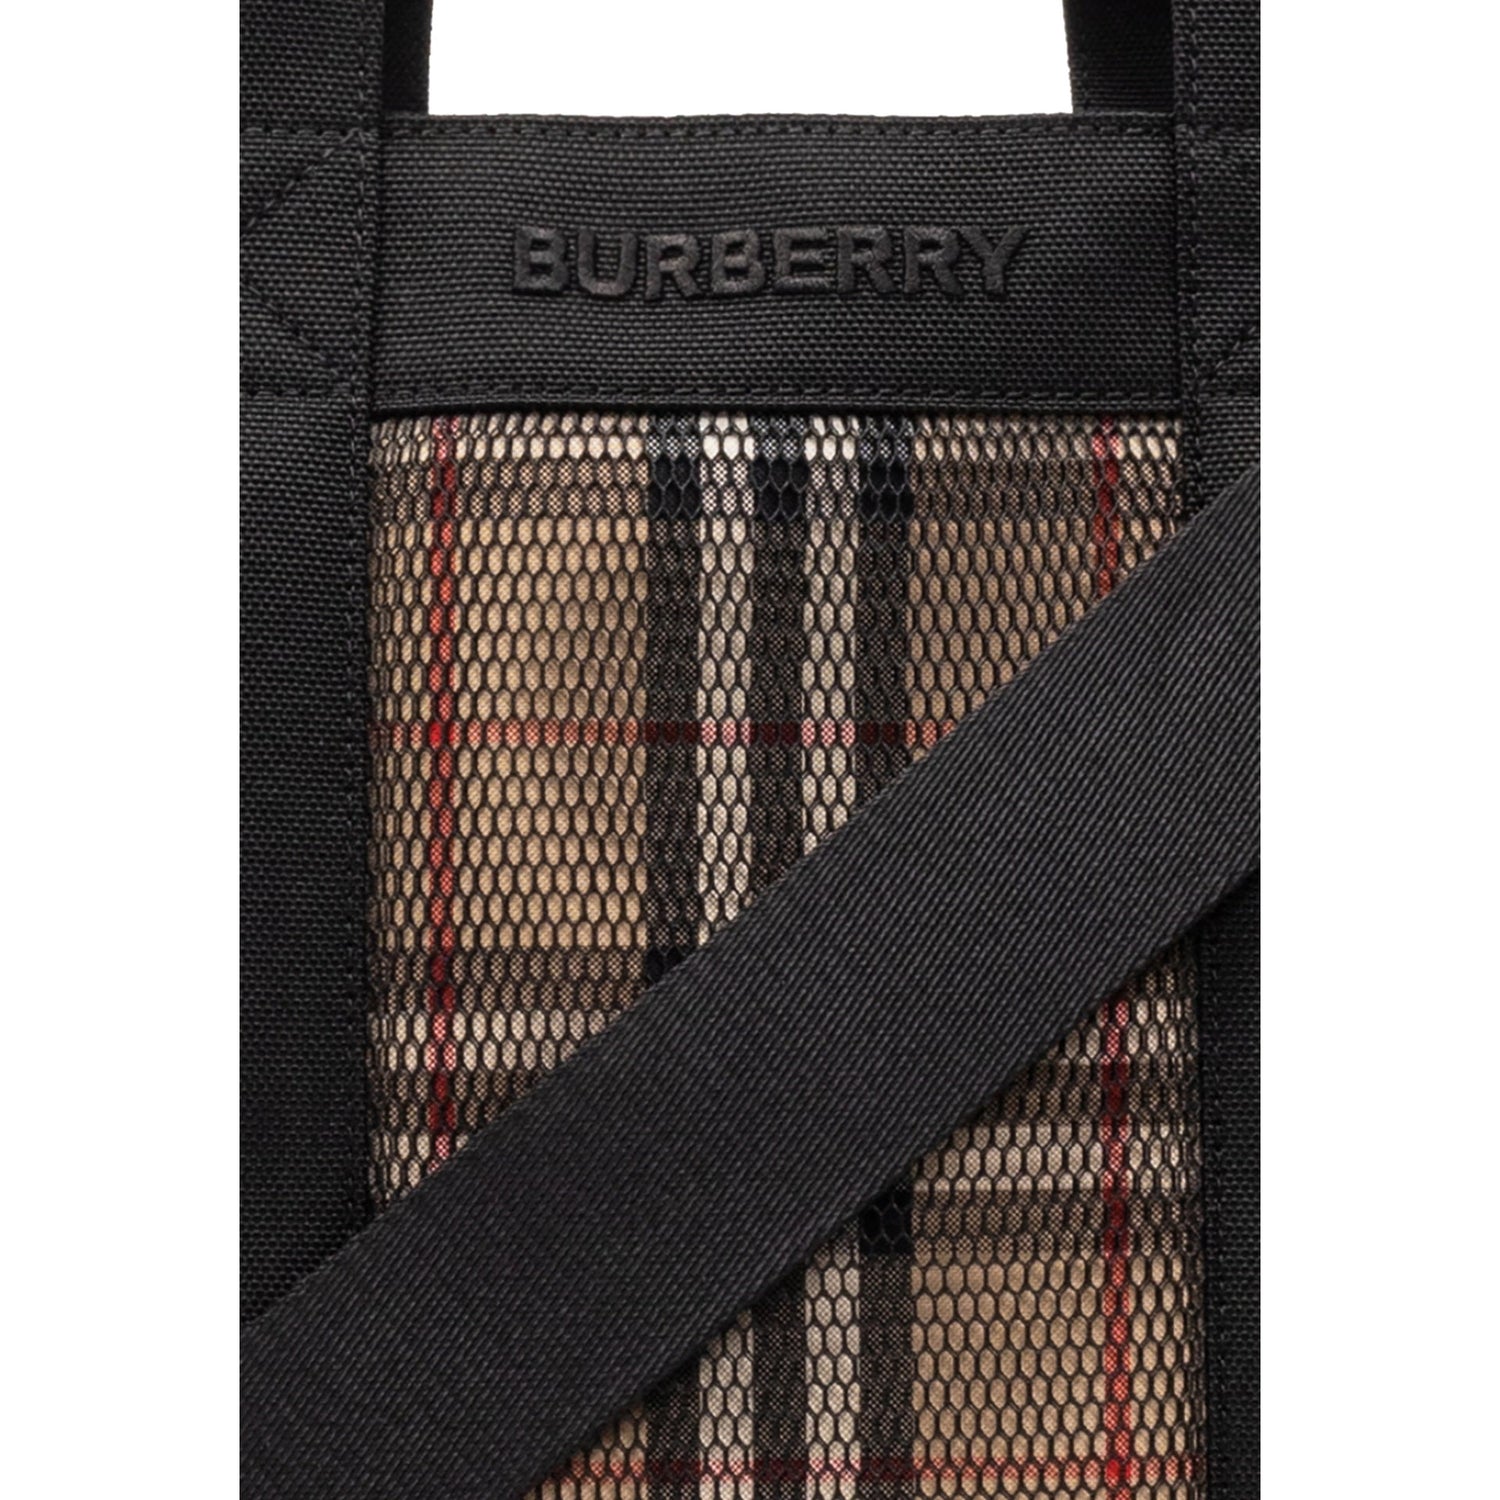 Burberry Men's Ormond Mesh Check Tote Bag